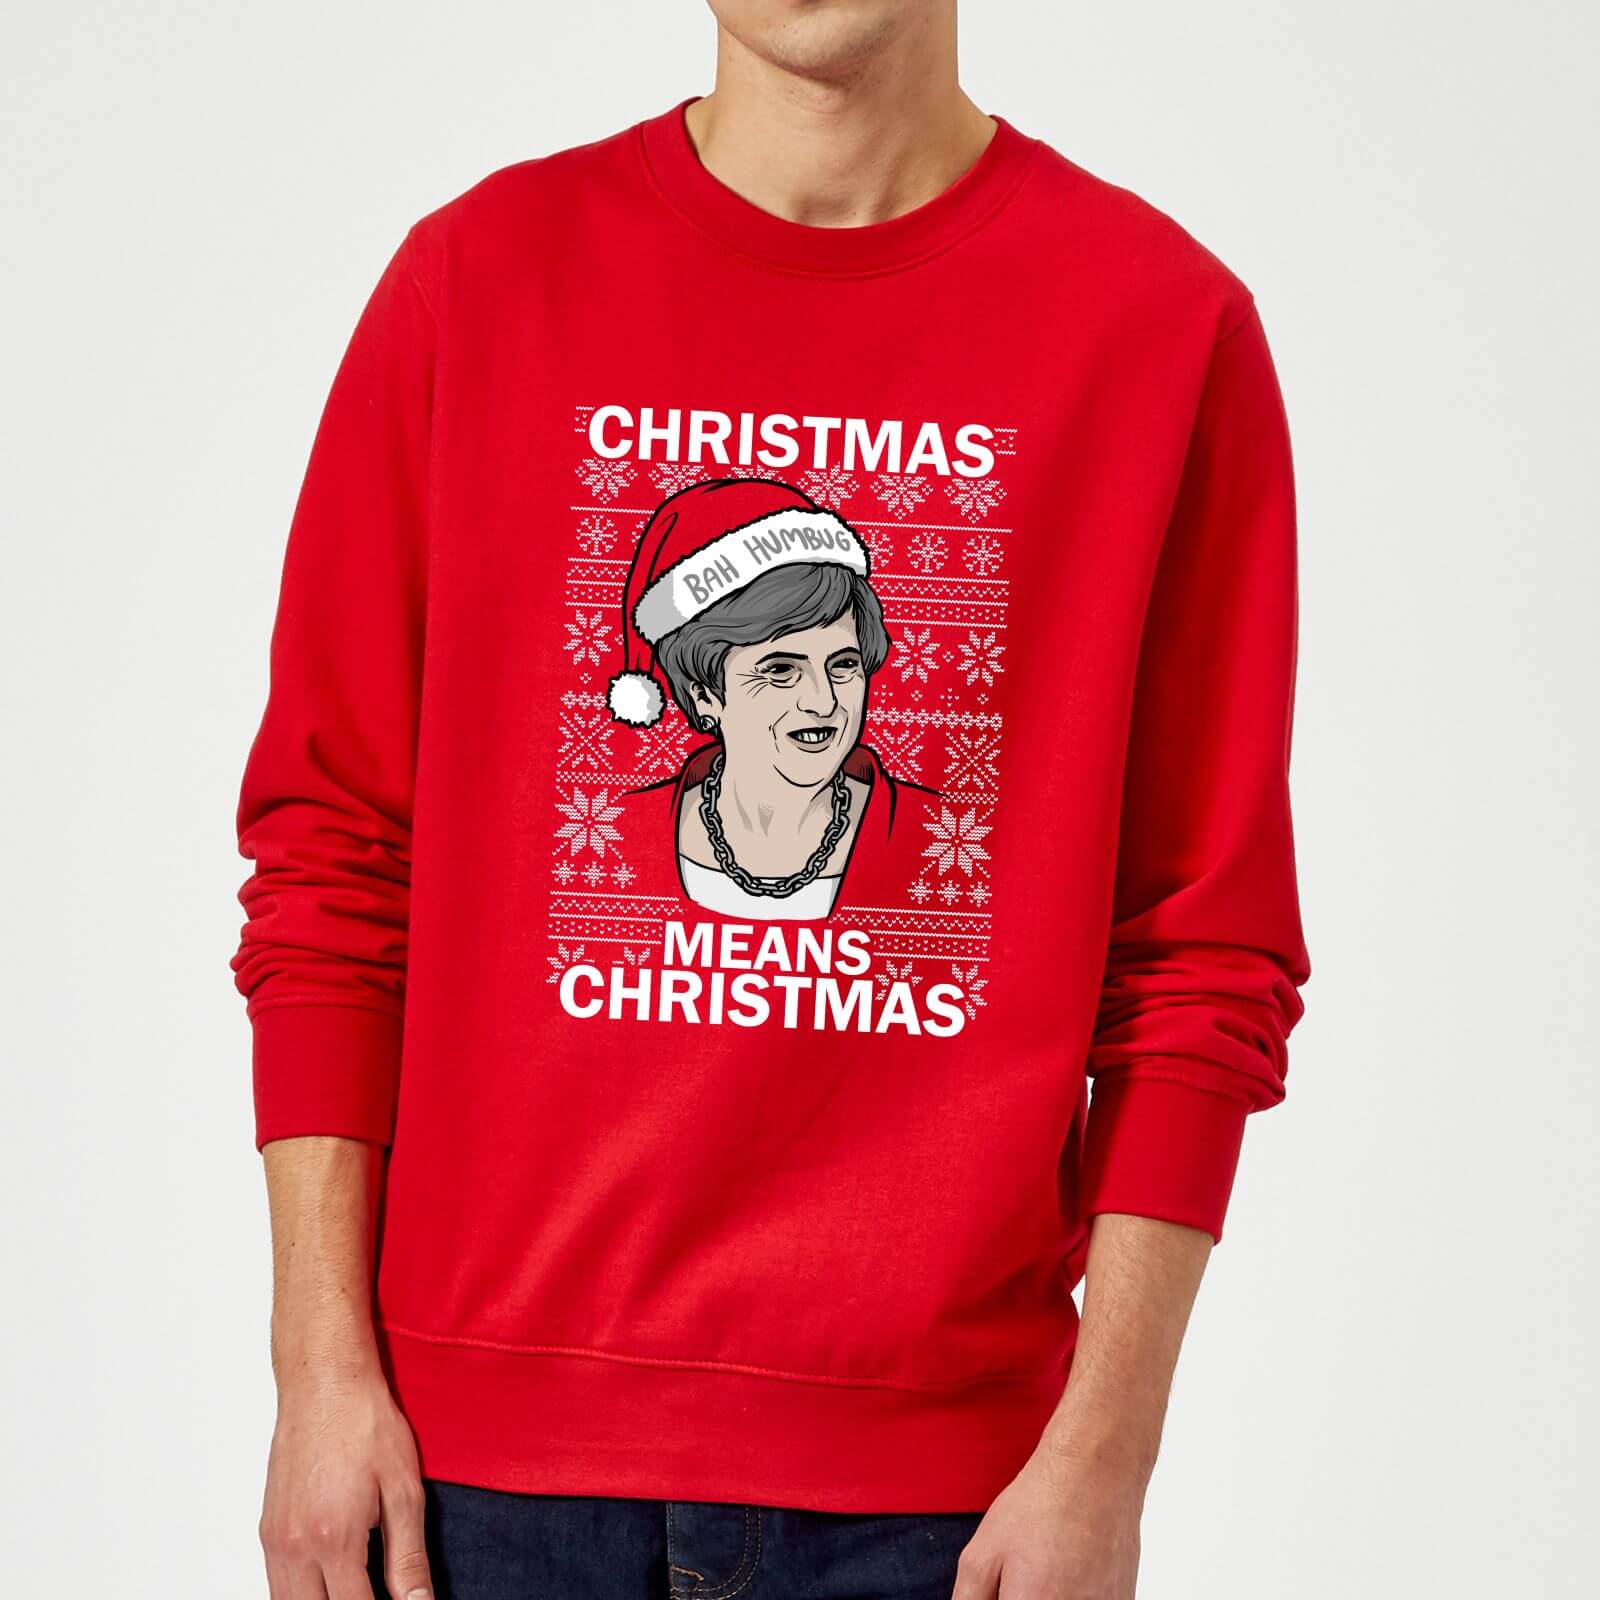 Christmas Means Christmas Christmas Sweatshirt - Red - M